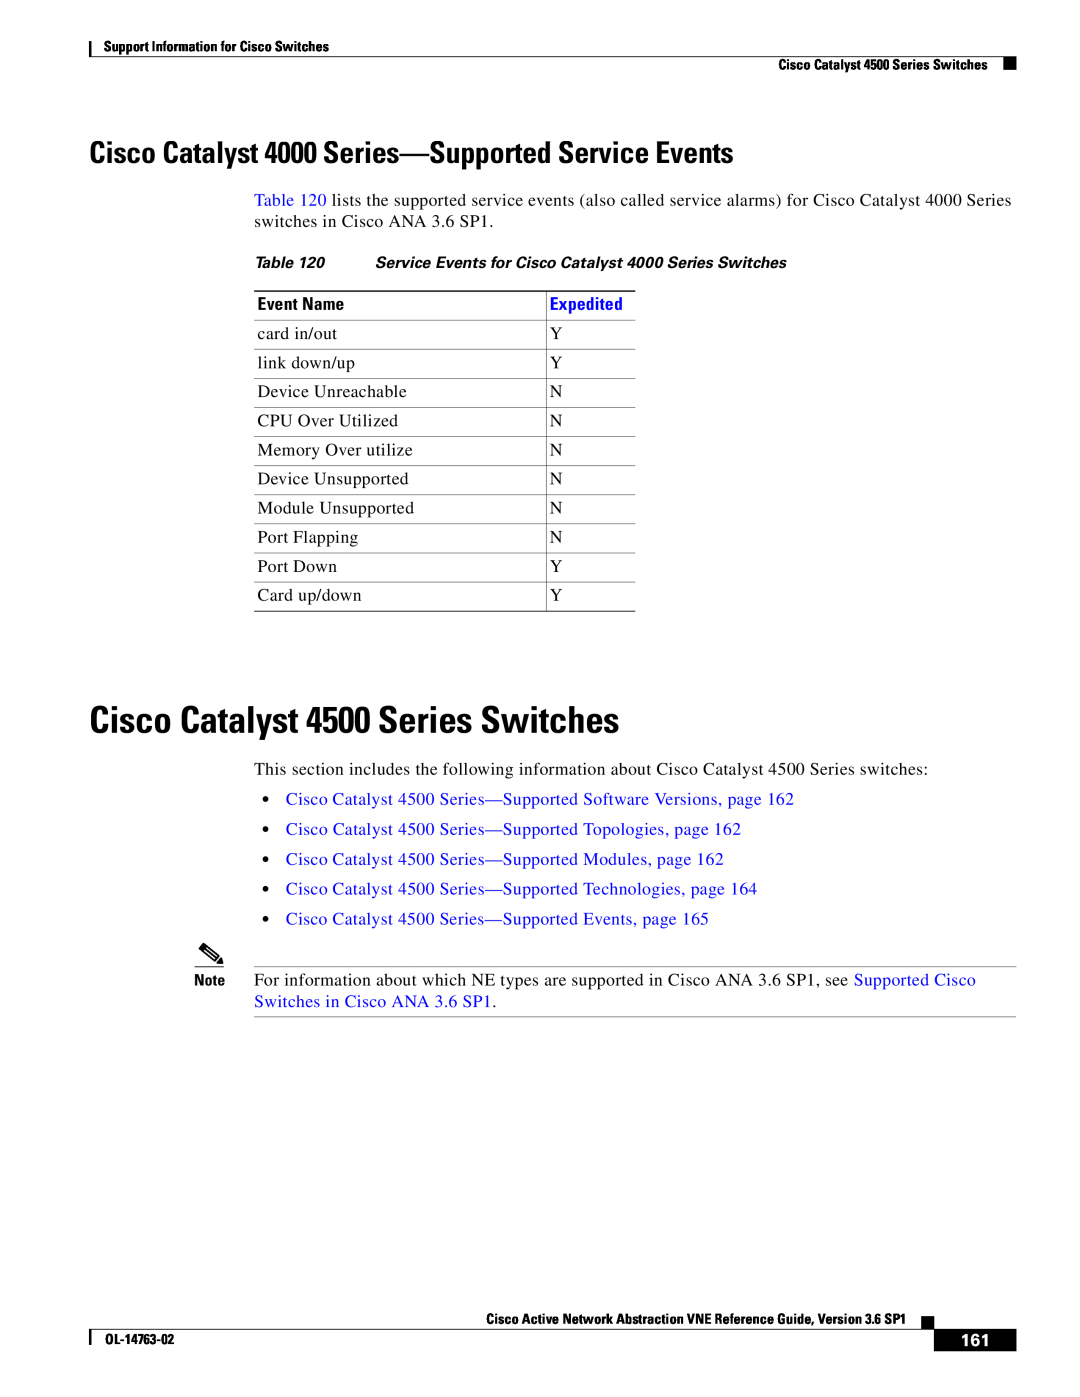 Cisco Systems OL-14763-02 manual Cisco Catalyst 4500 Series Switches, Cisco Catalyst 4000 Series-Supported Service Events 